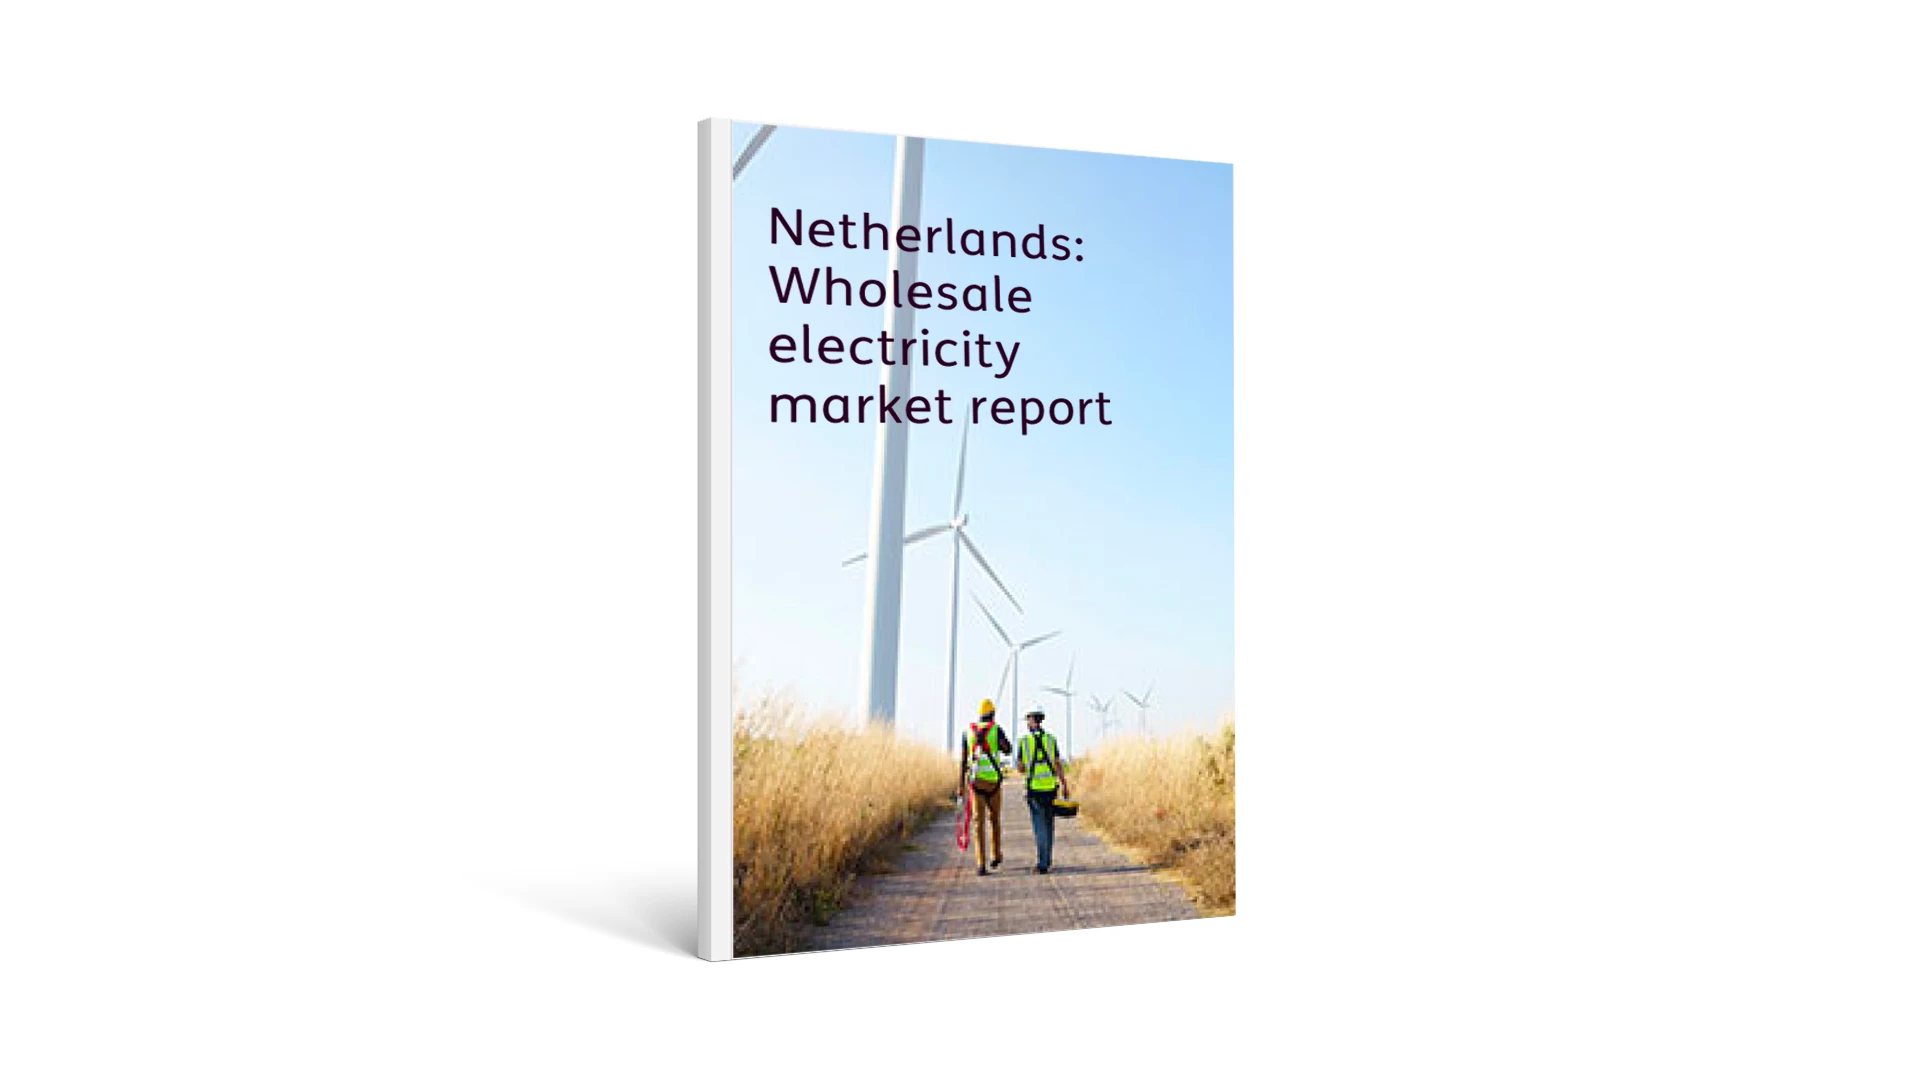 Netherlands: Wholesale electricity market report